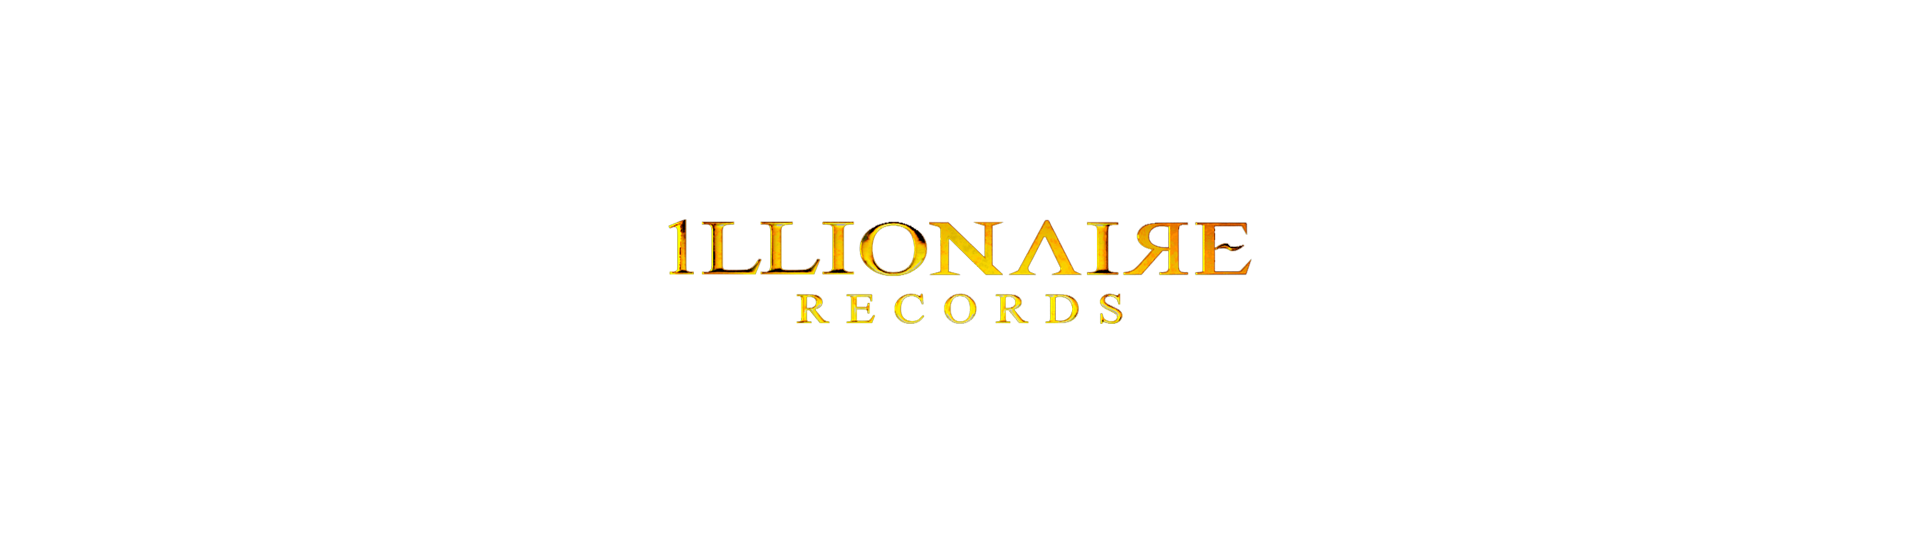 1illonaire Records on Behance22e59f79540577.5ccea90e0f24c.png